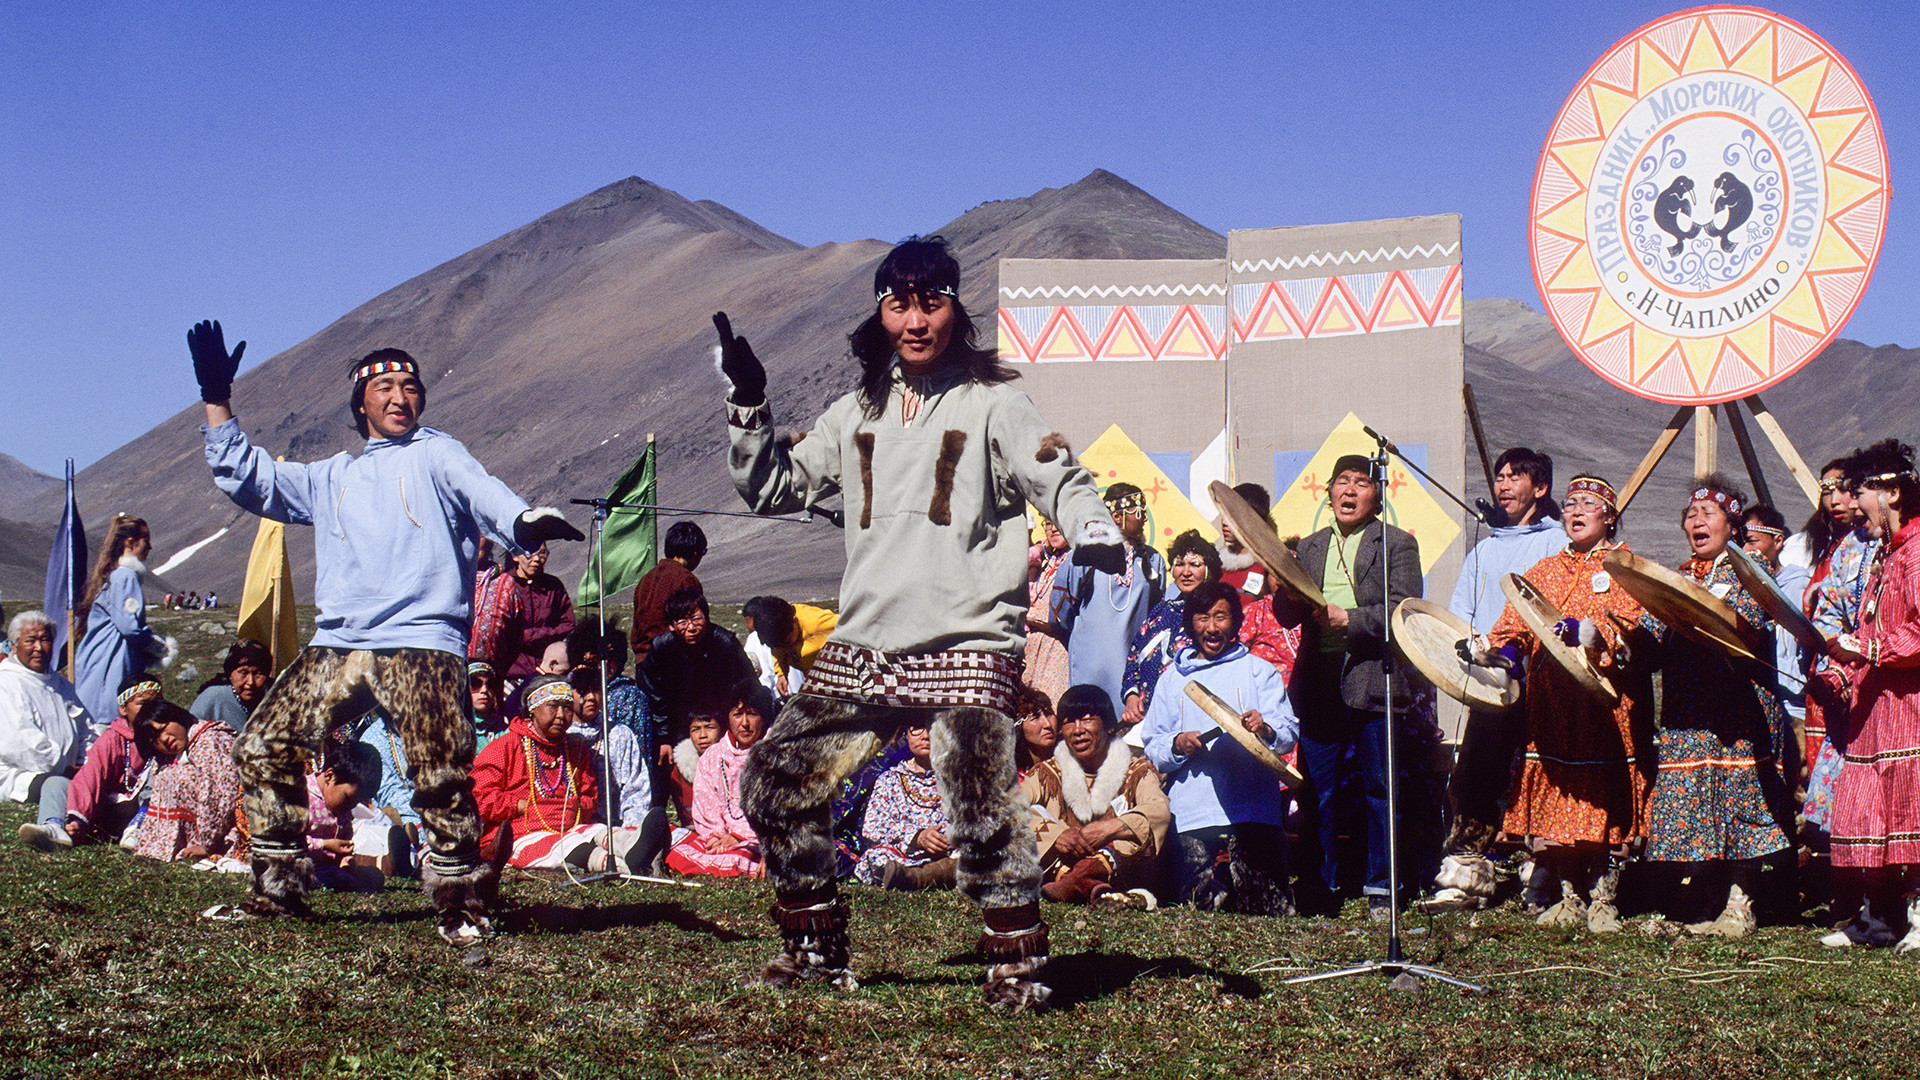 Tradicionalne igre na festivalu lova, Novo Čapljino, Čukotski kraj, Magadanska oblast, Rusija.

